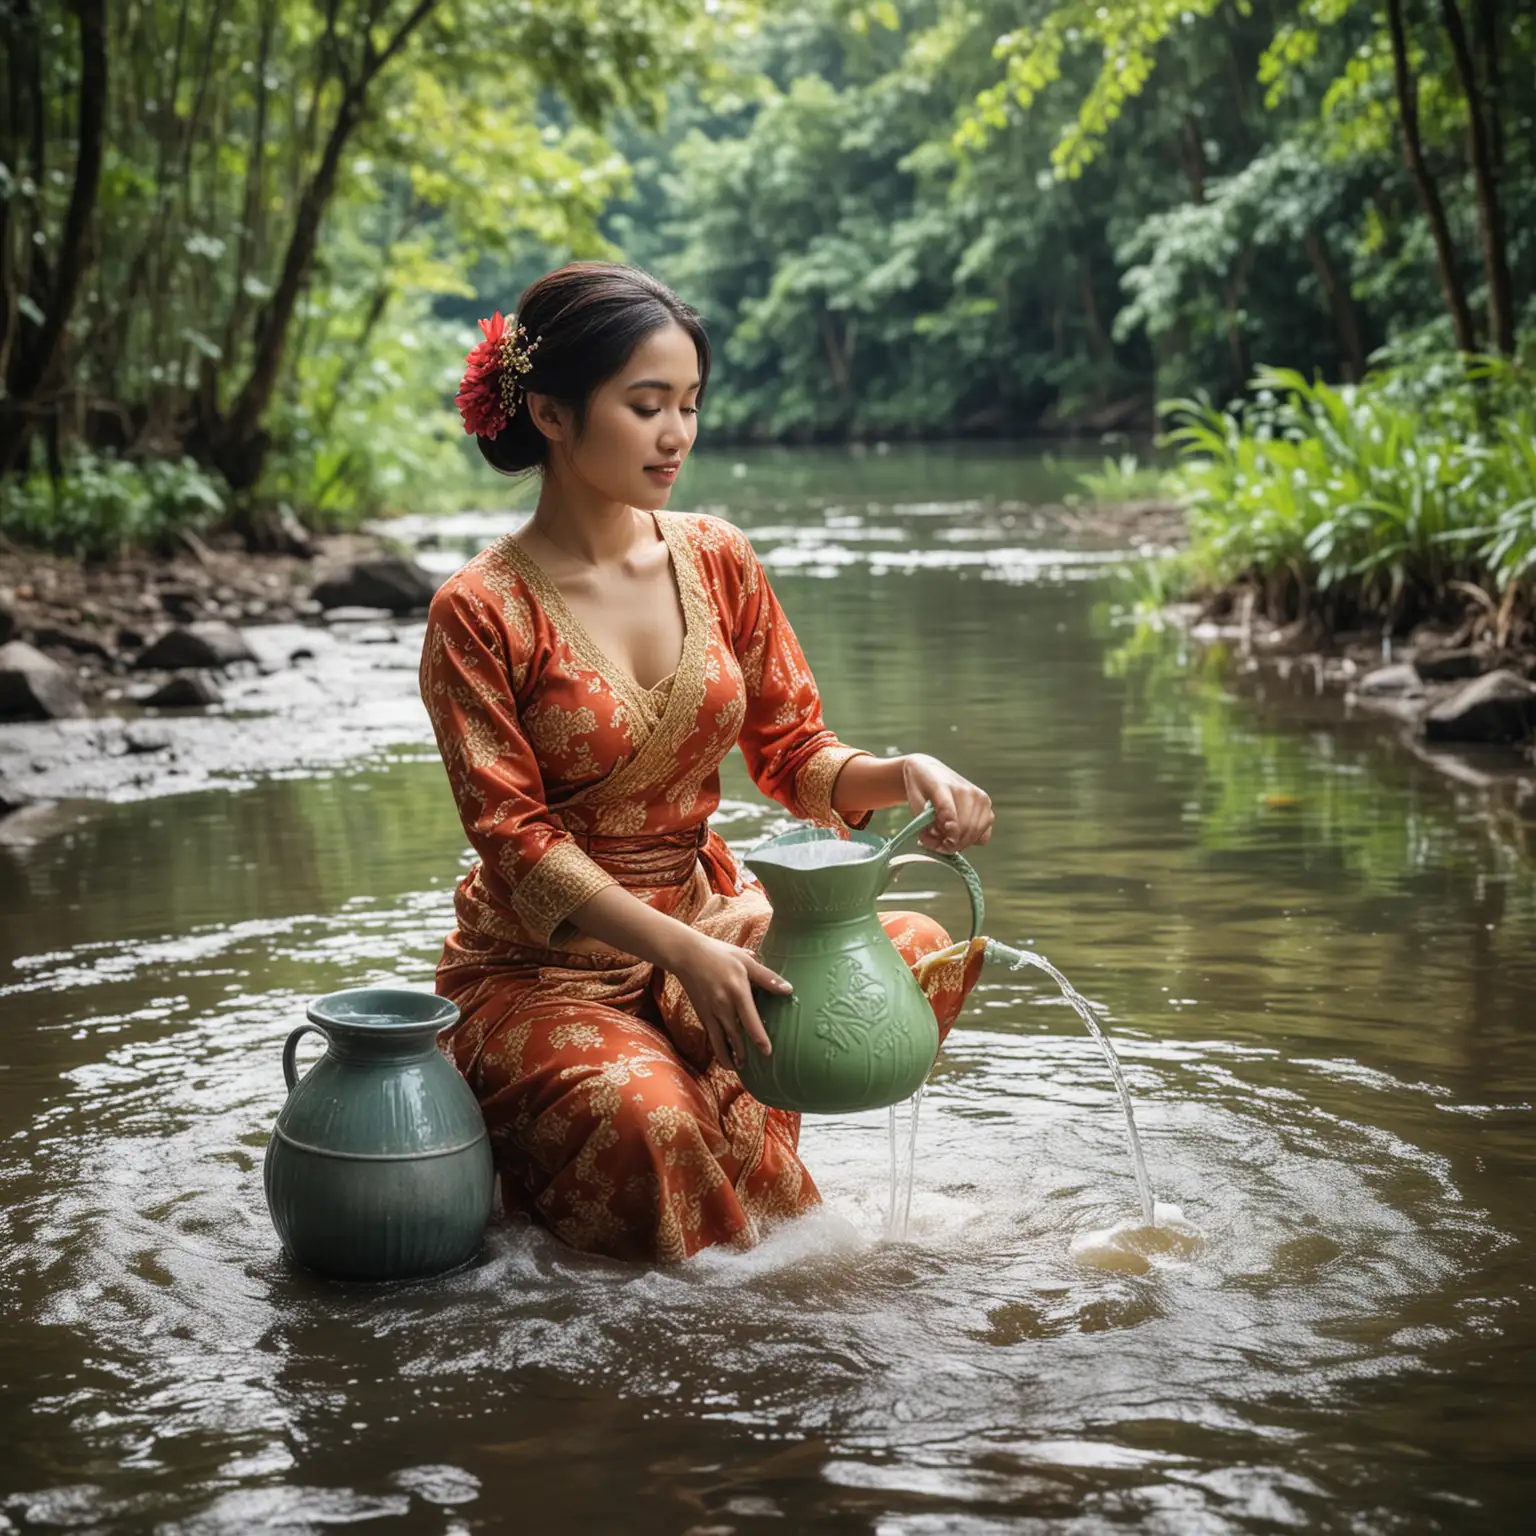 Wanita tradisional yang cantik dengan (gaya rambut), berpakaian kebaya, mencuci pakaian dengan ember-baju di tengah sungai dengan pemandangan hutan yang rindang, dikelilingi oleh teman-temannya